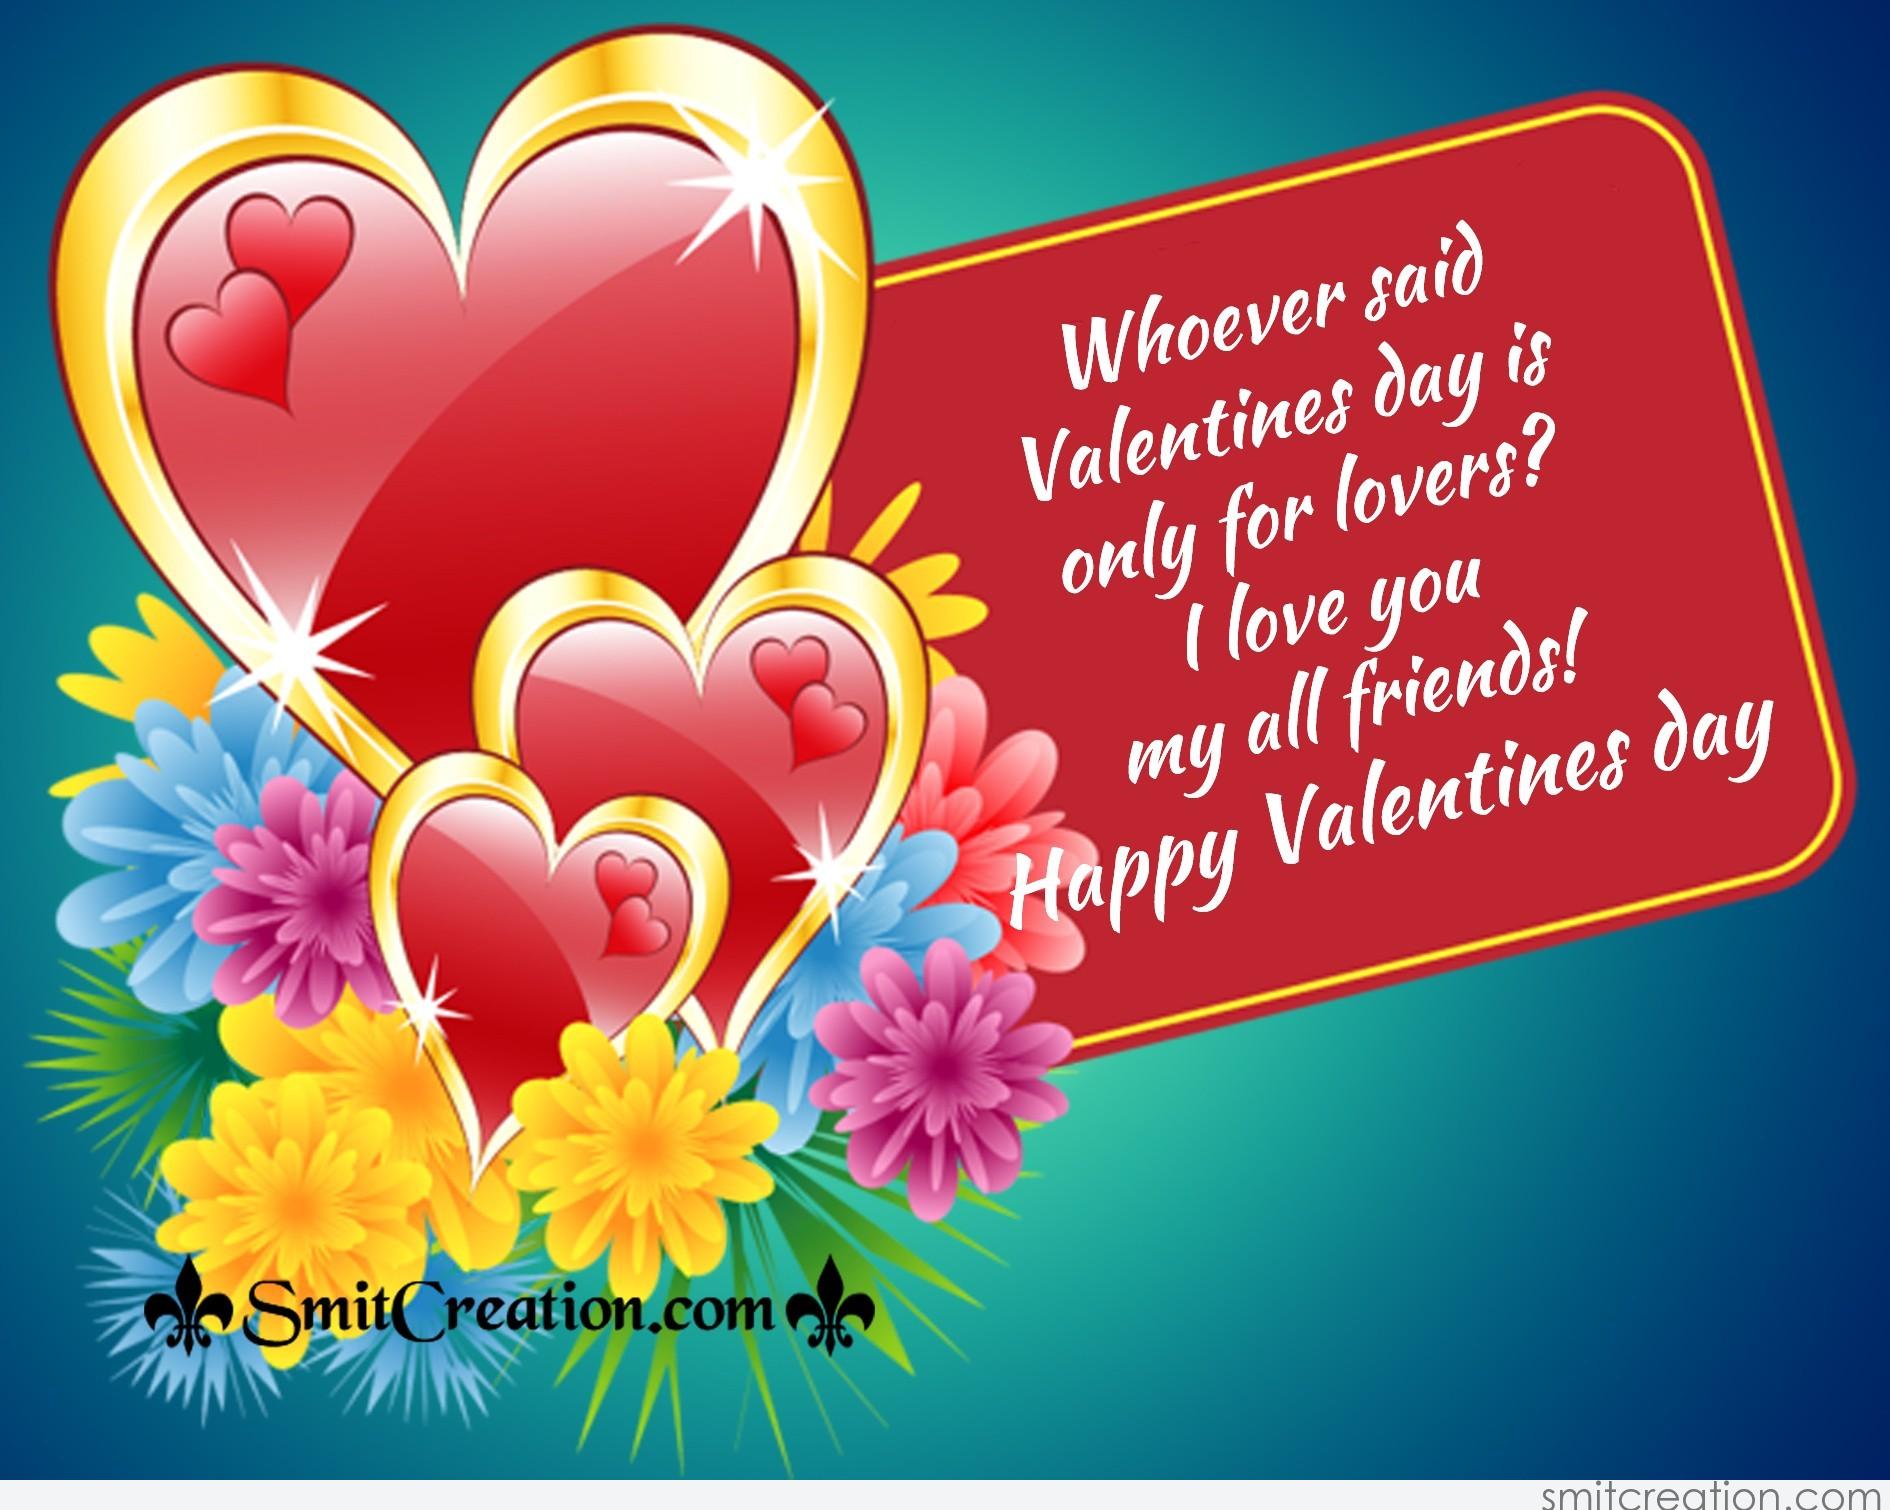 Happy Valentines day Dear Friend